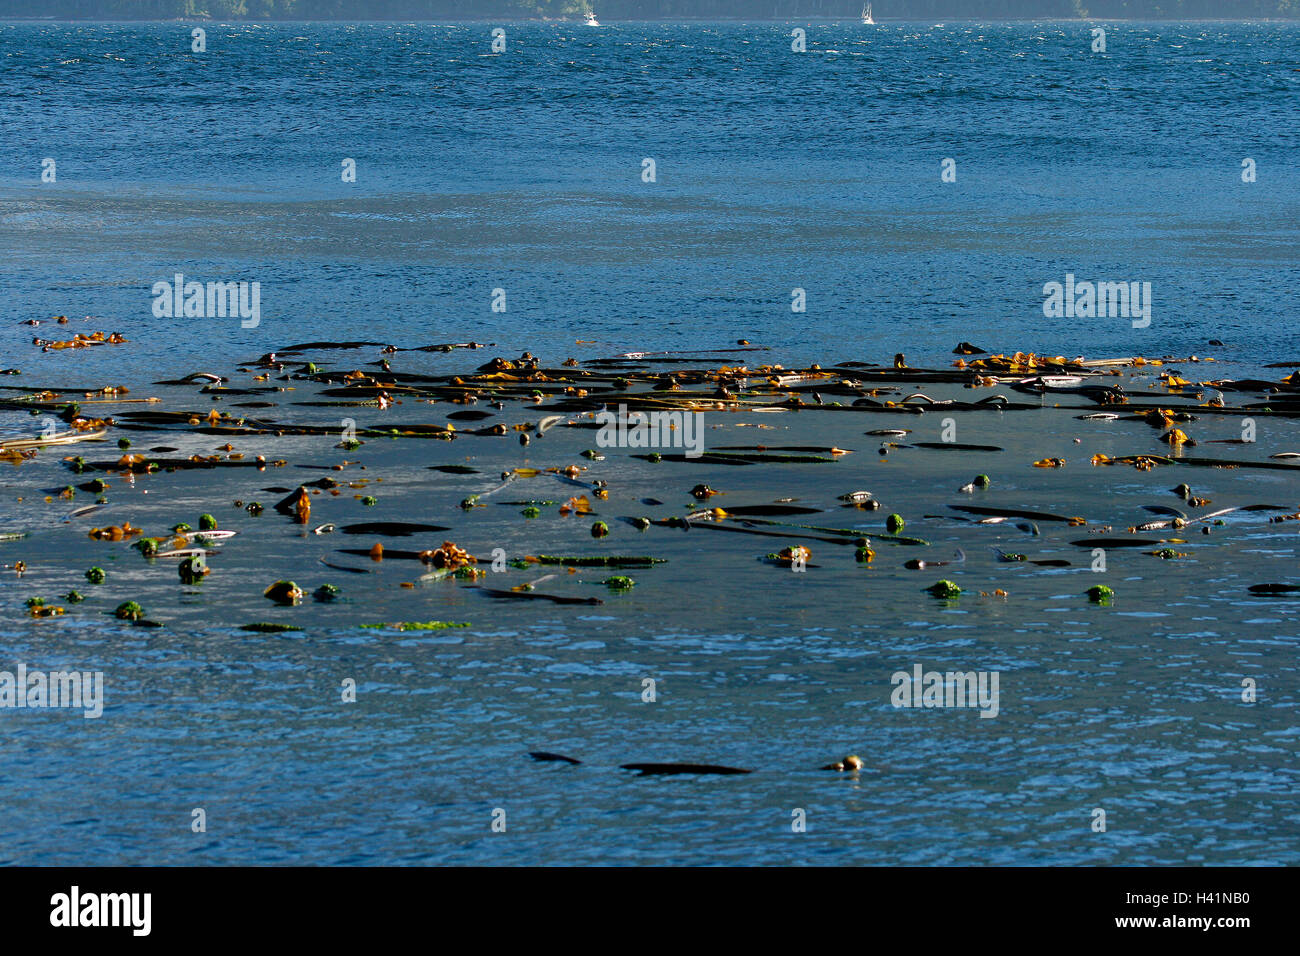 Bull Kelp Nereocystis leutkeana galleggia sulla superficie dell'acqua, l'isola di Vancouver. British Columbia. Canada Foto Stock